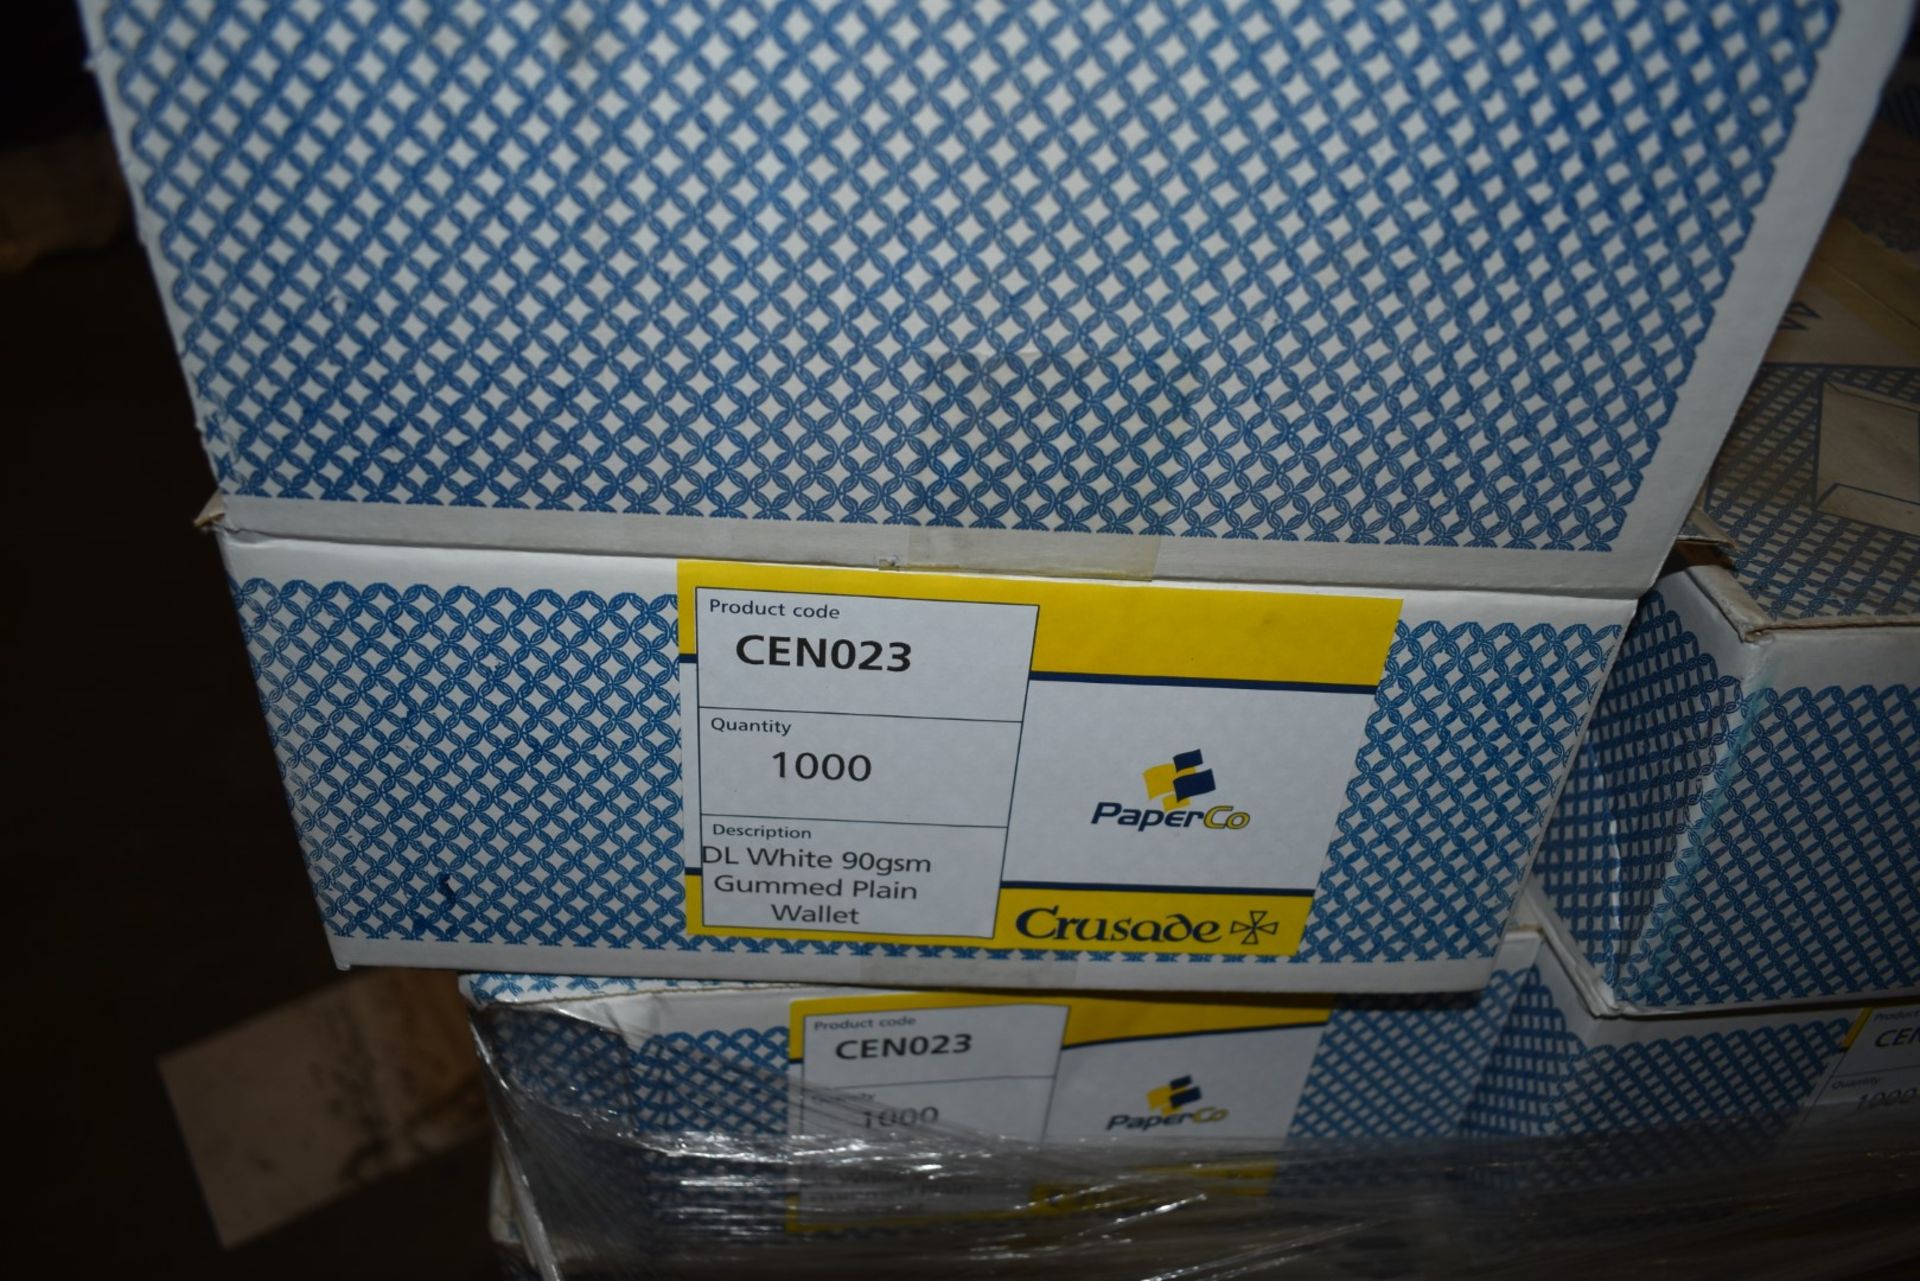 22 x Boxes of Crusade 90gsm Plain Gummed White Envelopes - Each Box Contains 1,000 Envelopes - Ref - Image 3 of 3